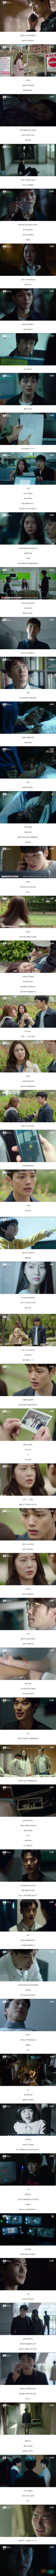 episode 4 captures for the Korean drama 'Circle'